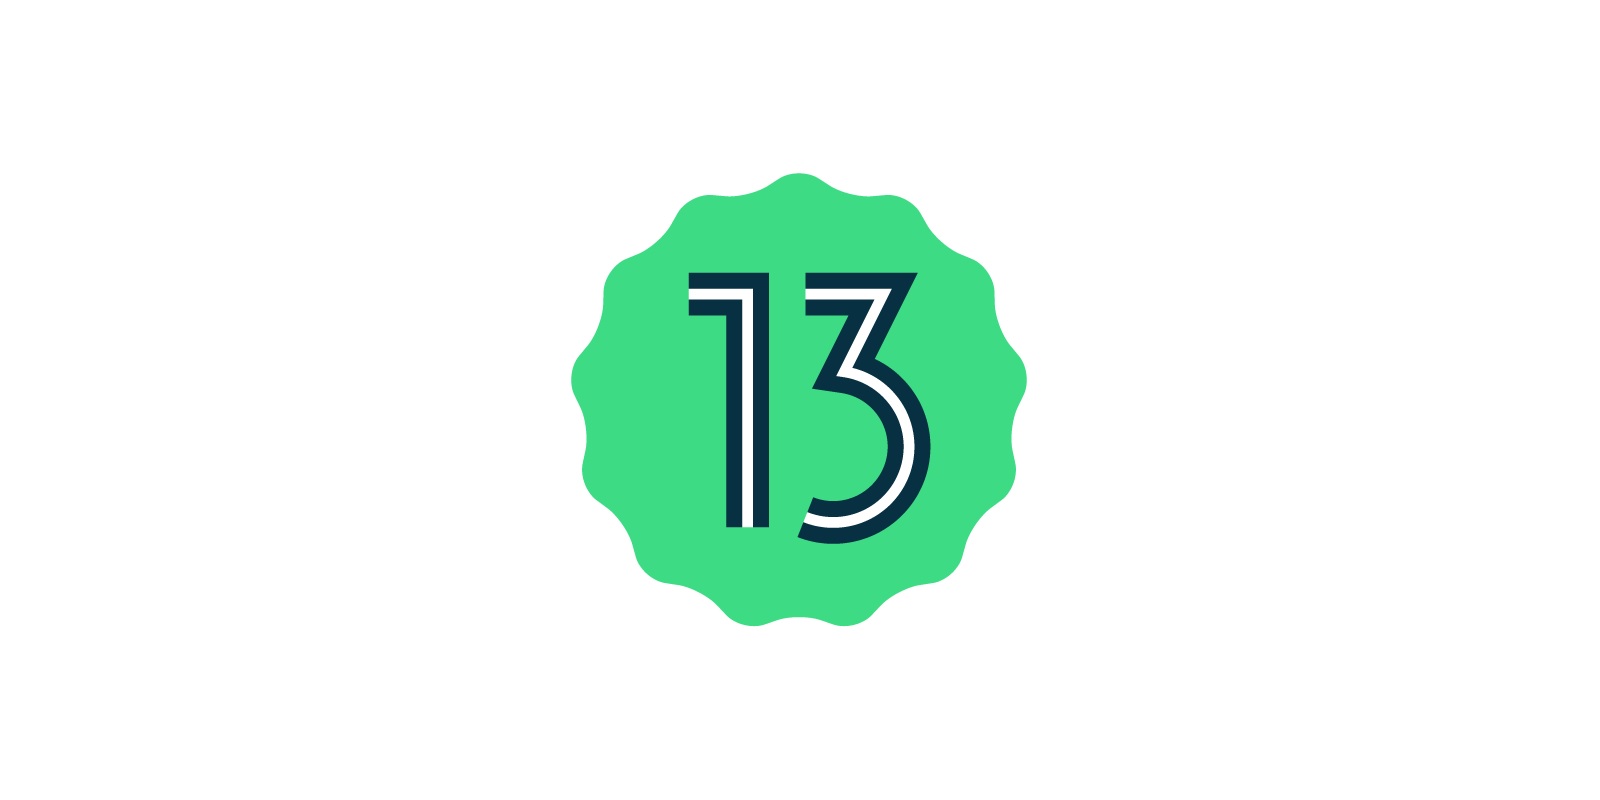 Google Android 13 logo